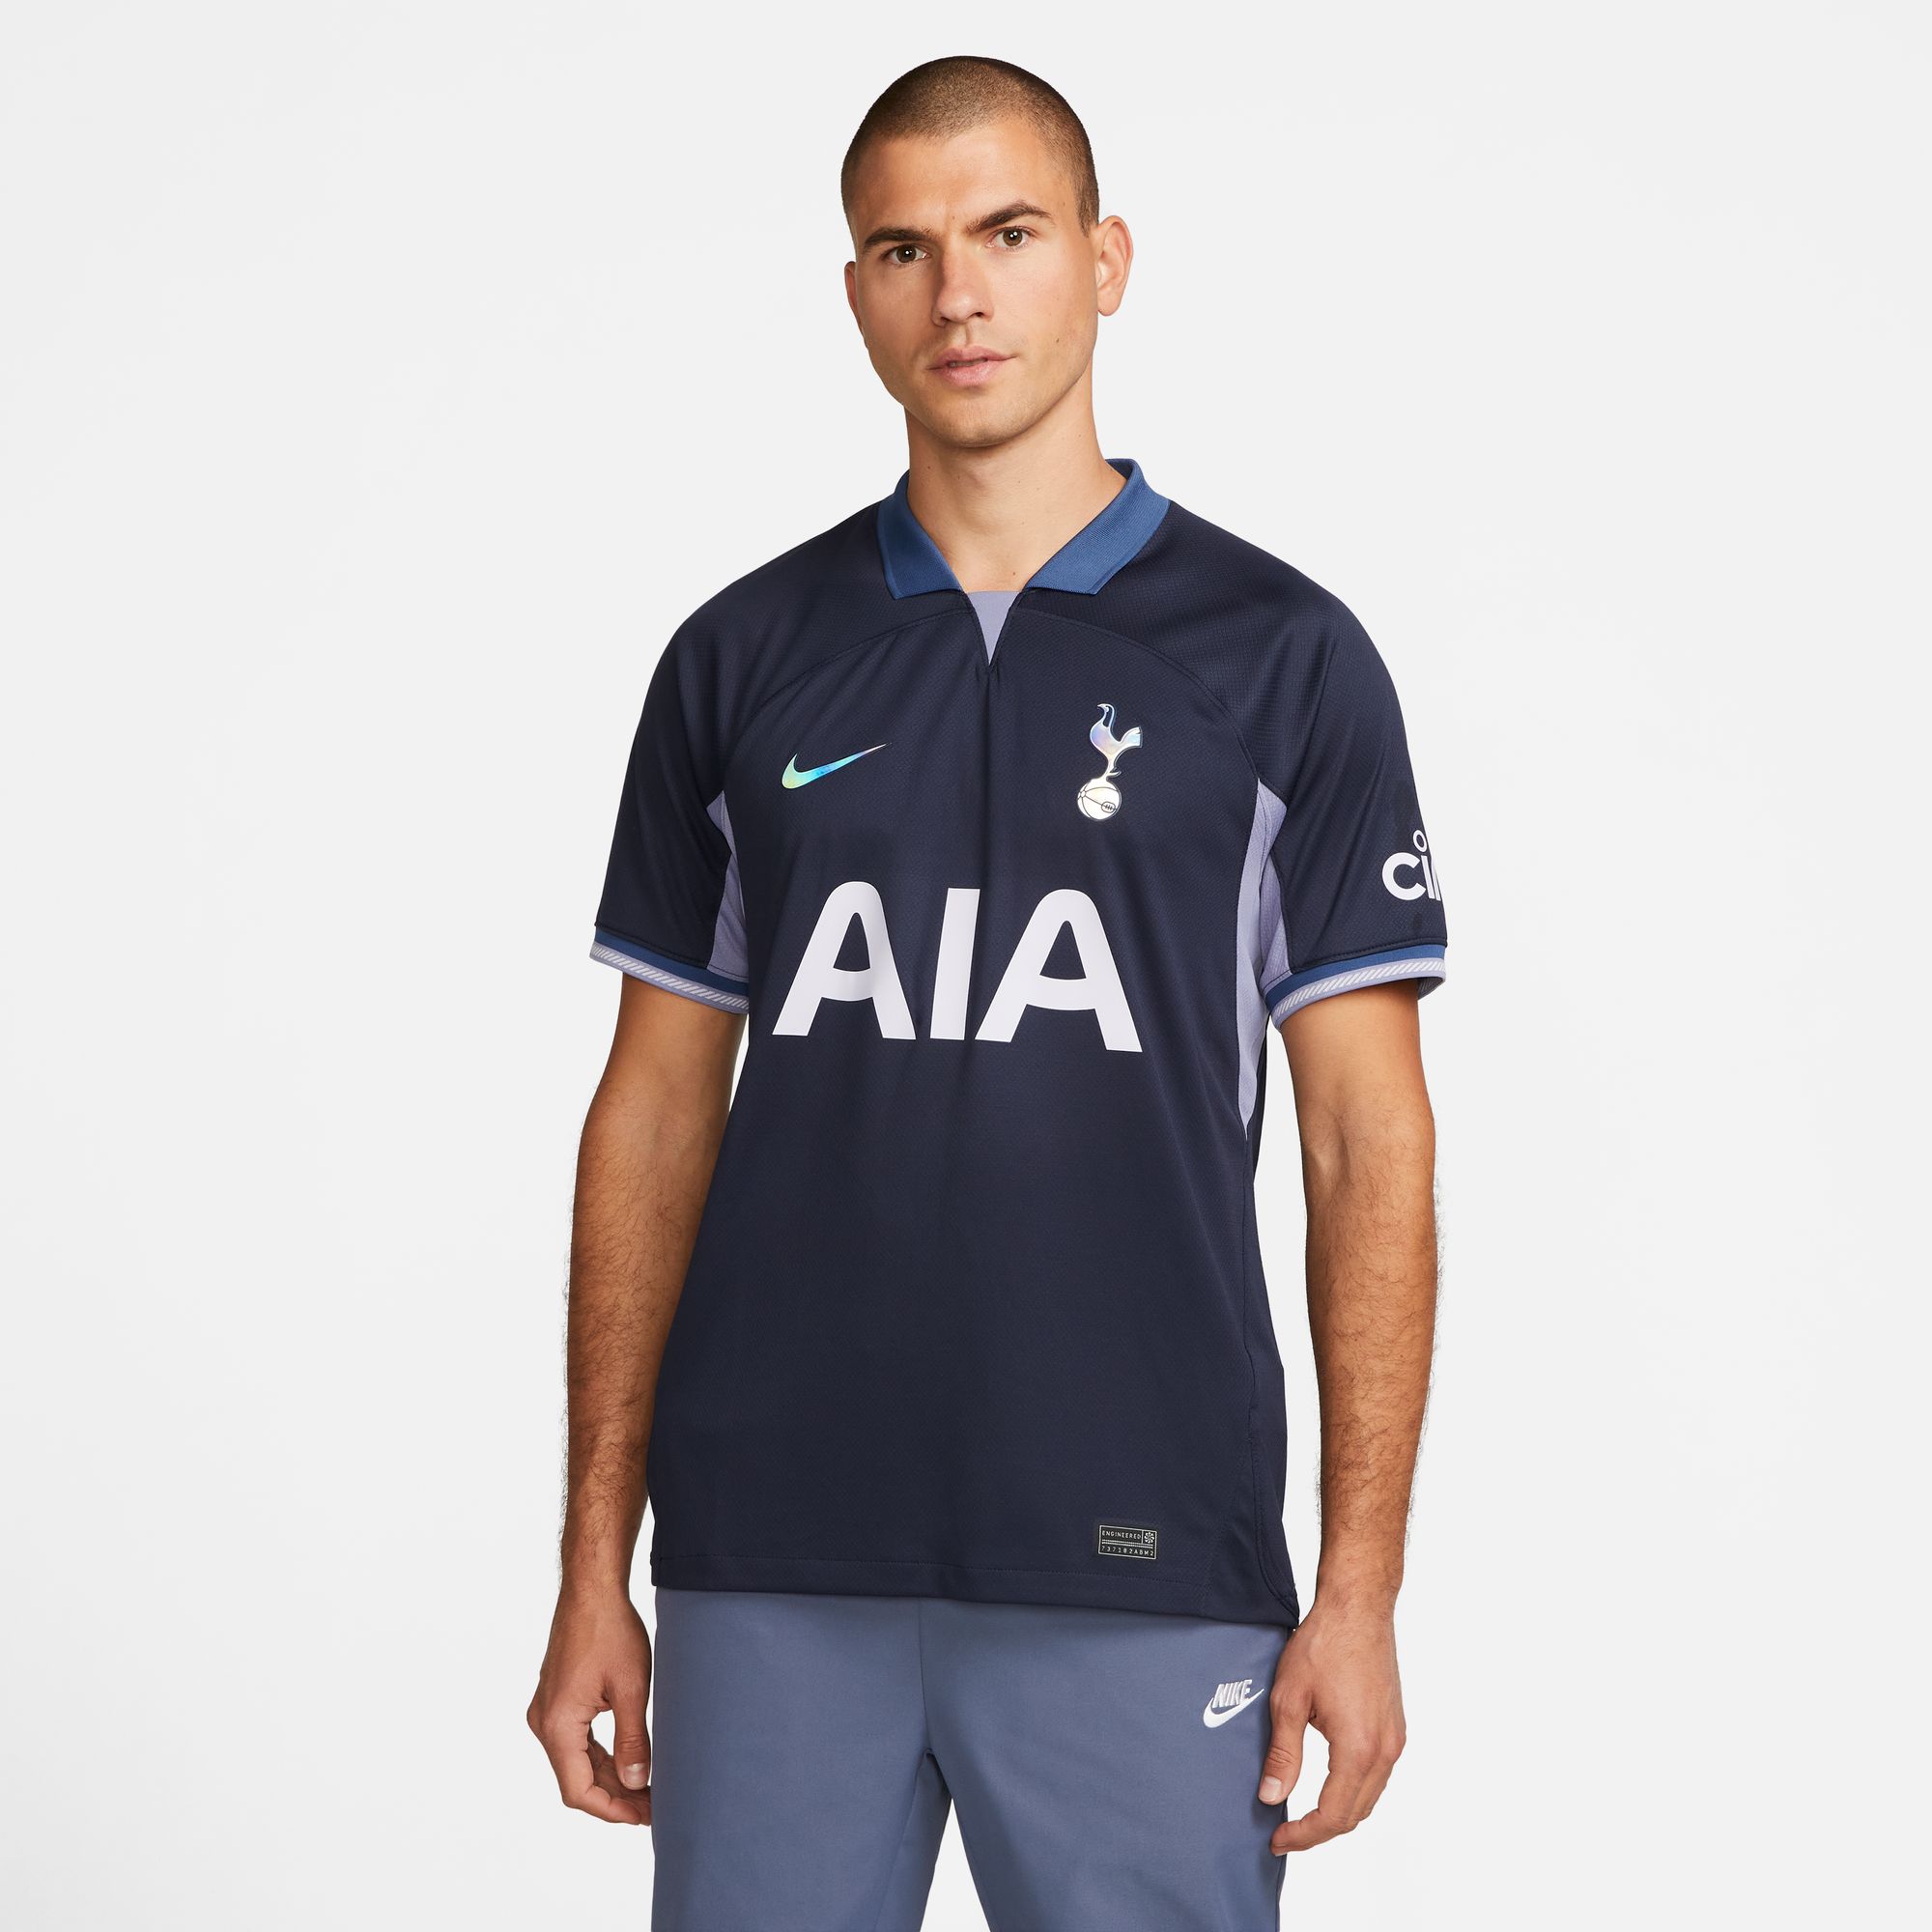 Tottenham Hotspur new kit 23/24 predicted release date